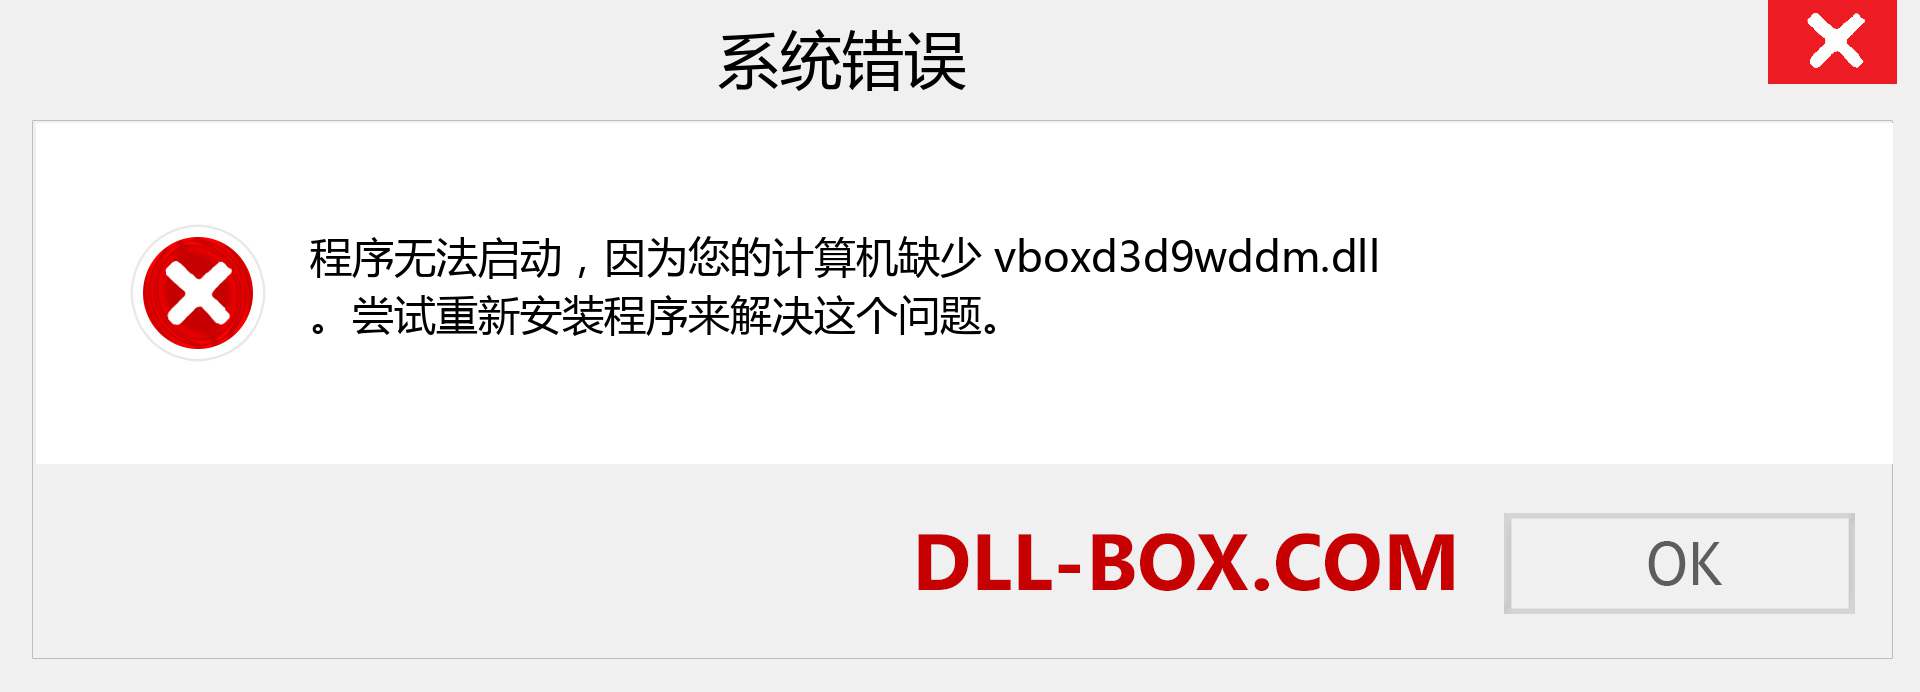 vboxd3d9wddm.dll 文件丢失？。 适用于 Windows 7、8、10 的下载 - 修复 Windows、照片、图像上的 vboxd3d9wddm dll 丢失错误